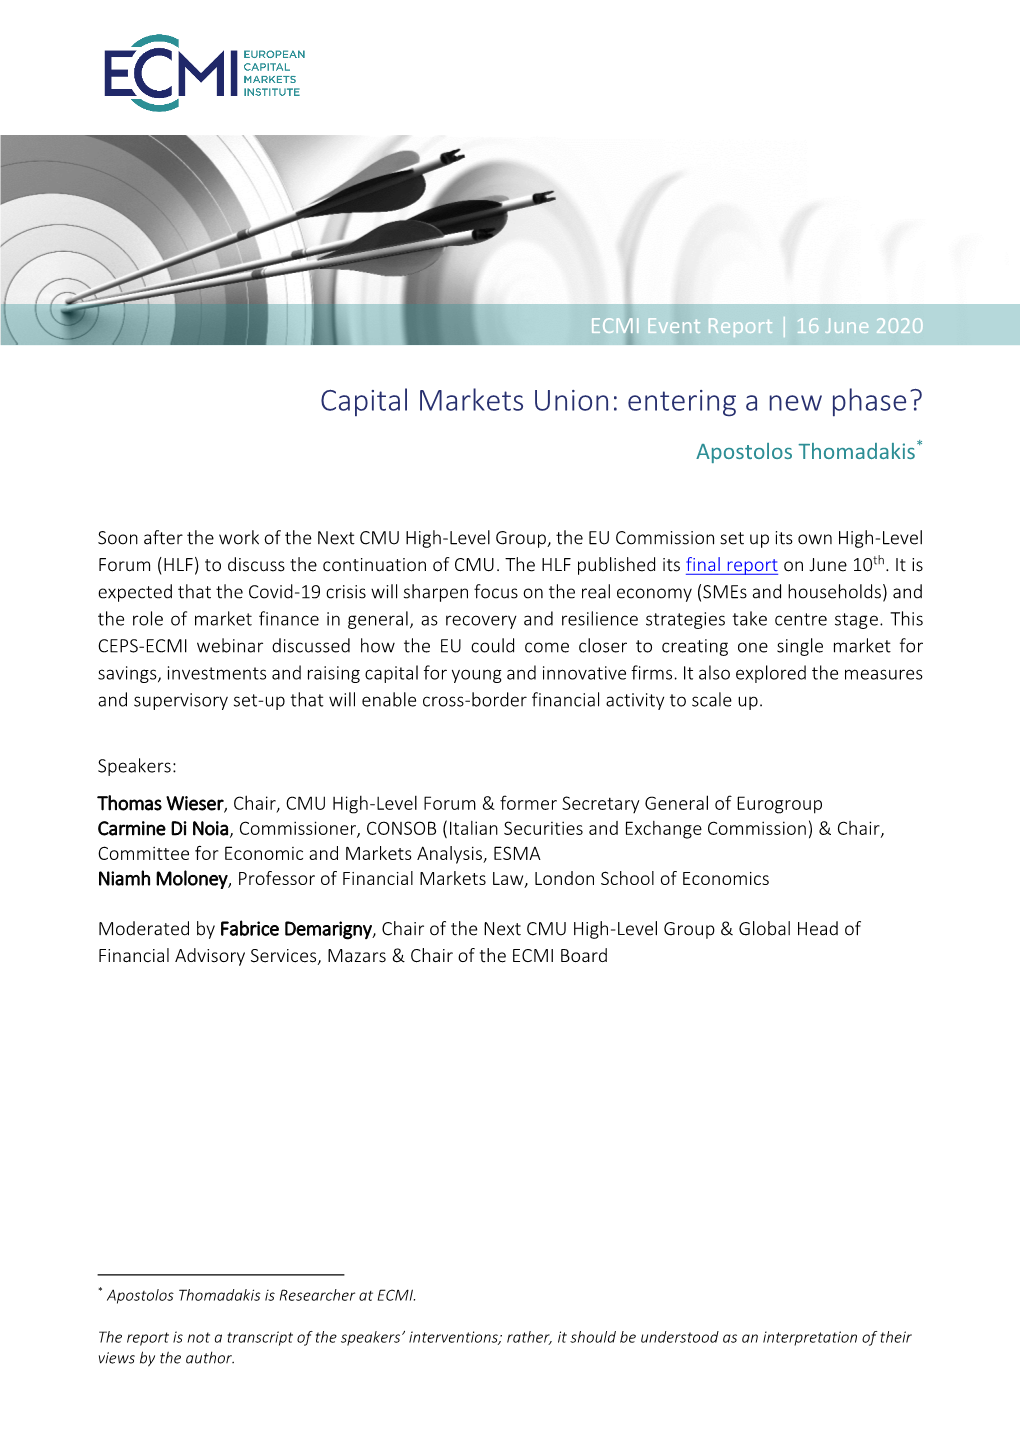 Capital Markets Union: Entering a New Phase? Apostolos Thomadakis*